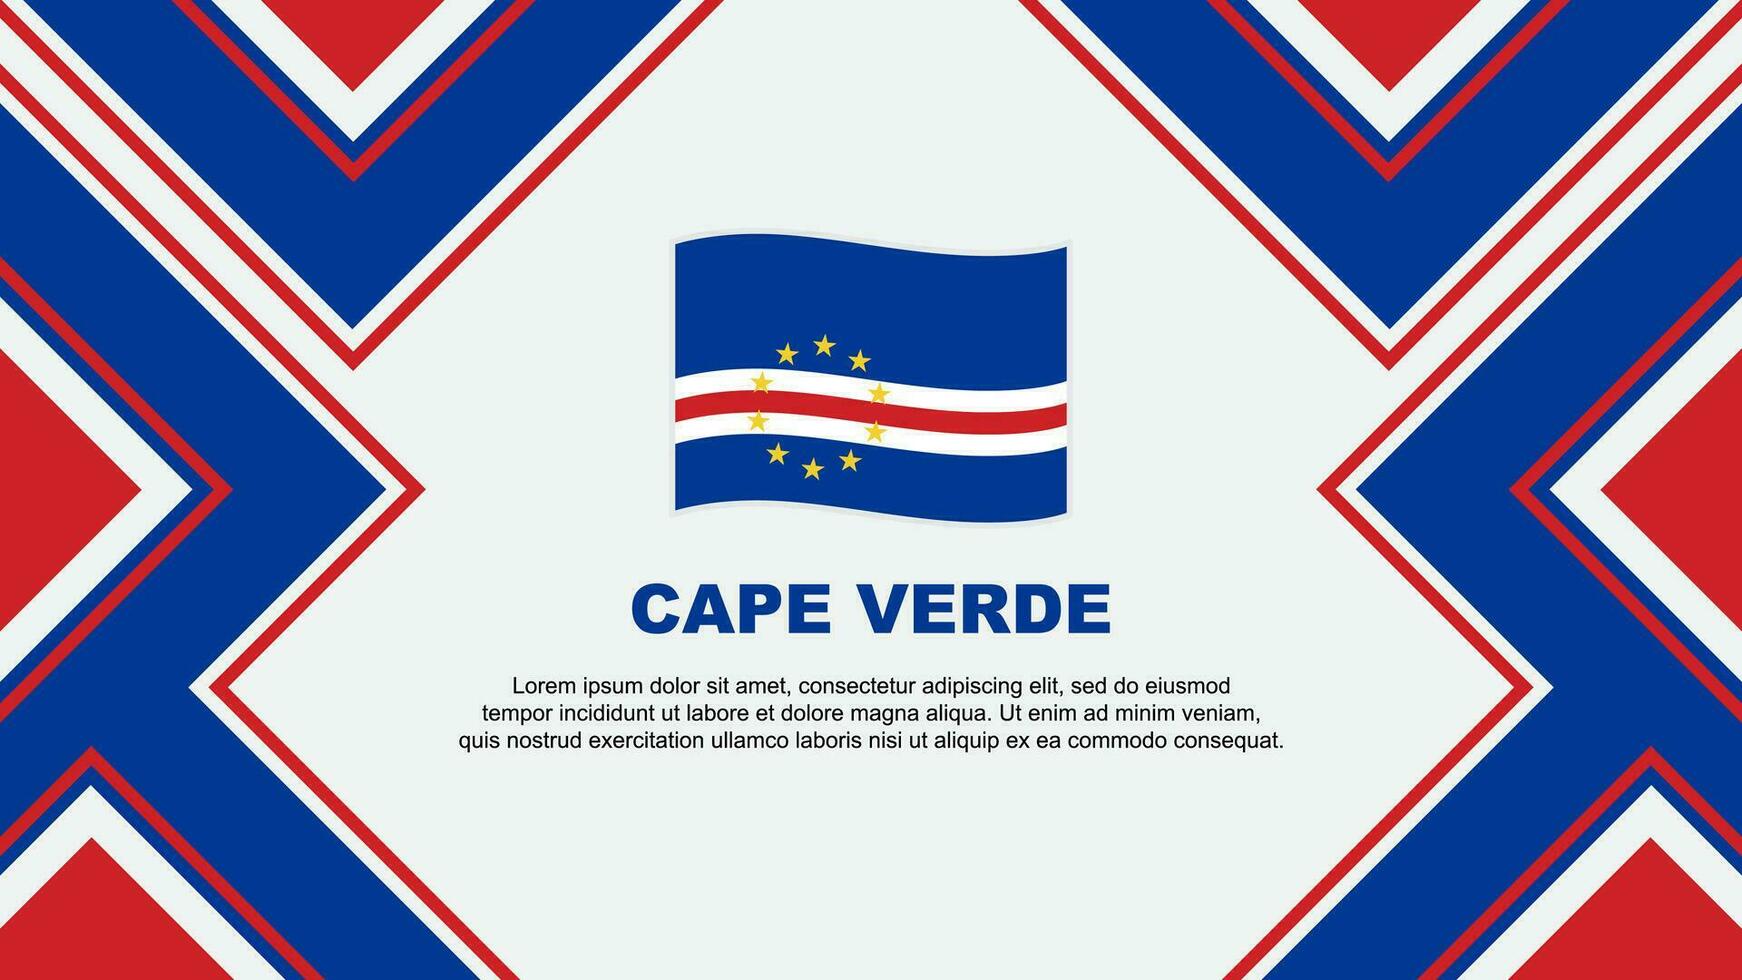 Cape Verde Flag Abstract Background Design Template. Cape Verde Independence Day Banner Wallpaper Vector Illustration. Cape Verde Vector